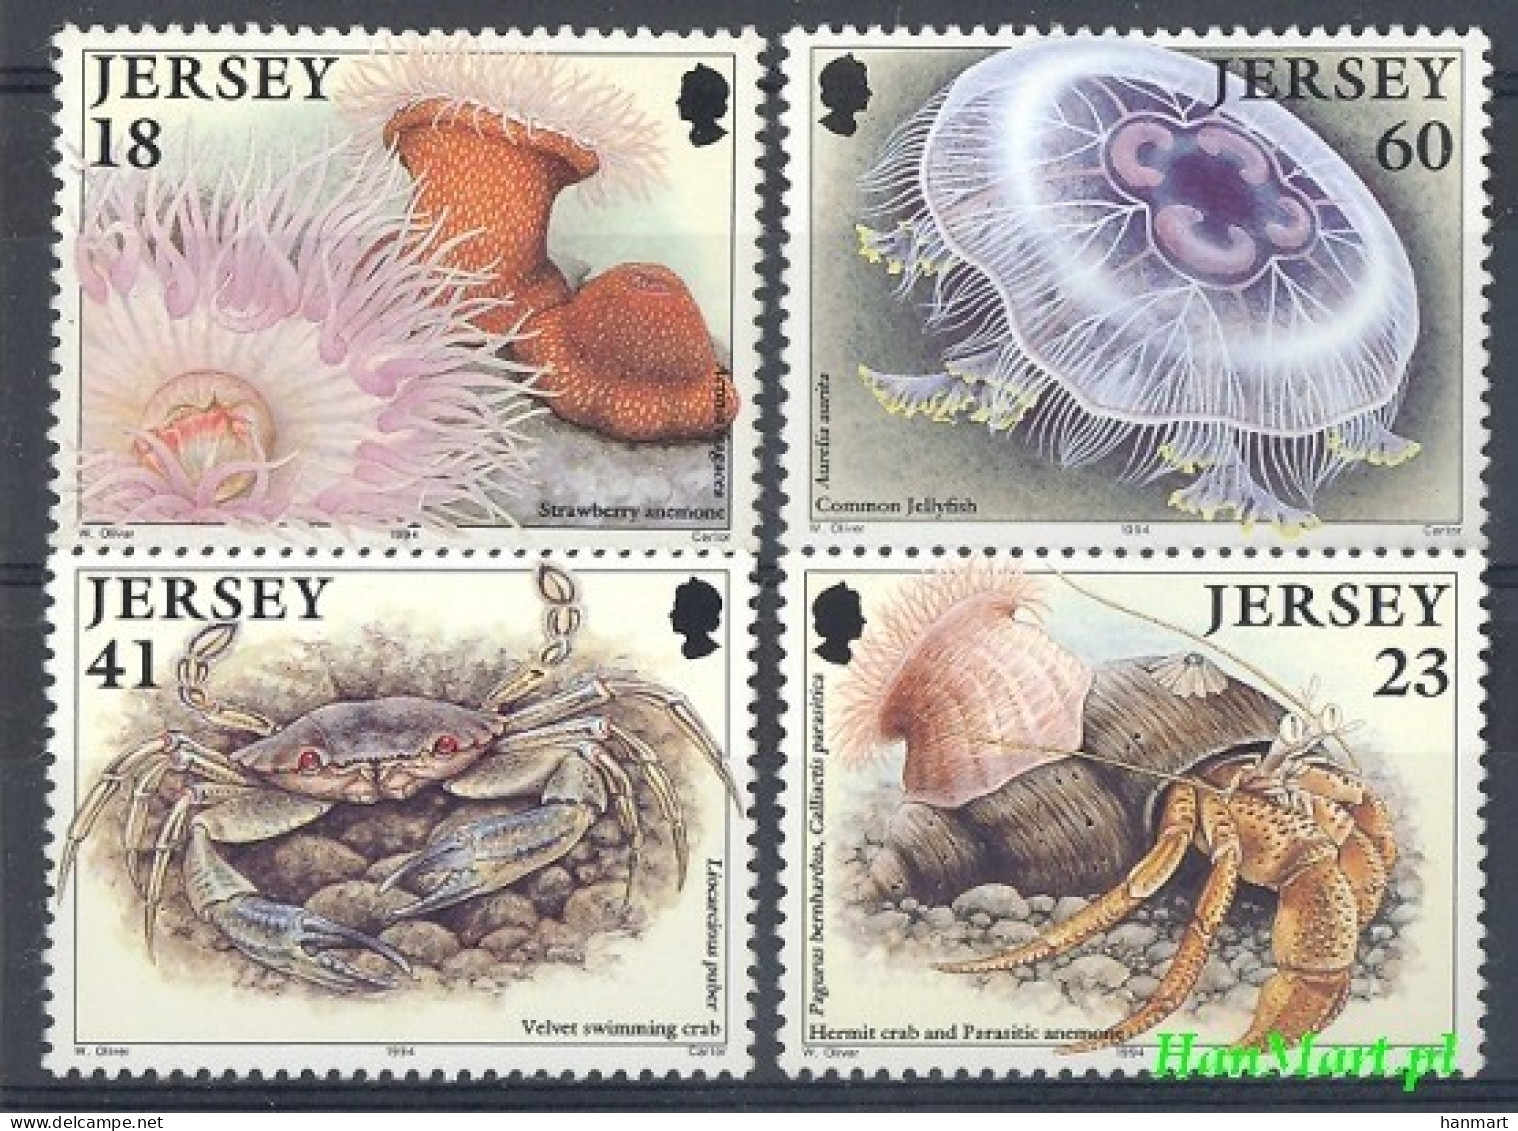 Jersey 1994 Mi 665-668 MNH  (ZE3 JRS665-668) - Schalentiere